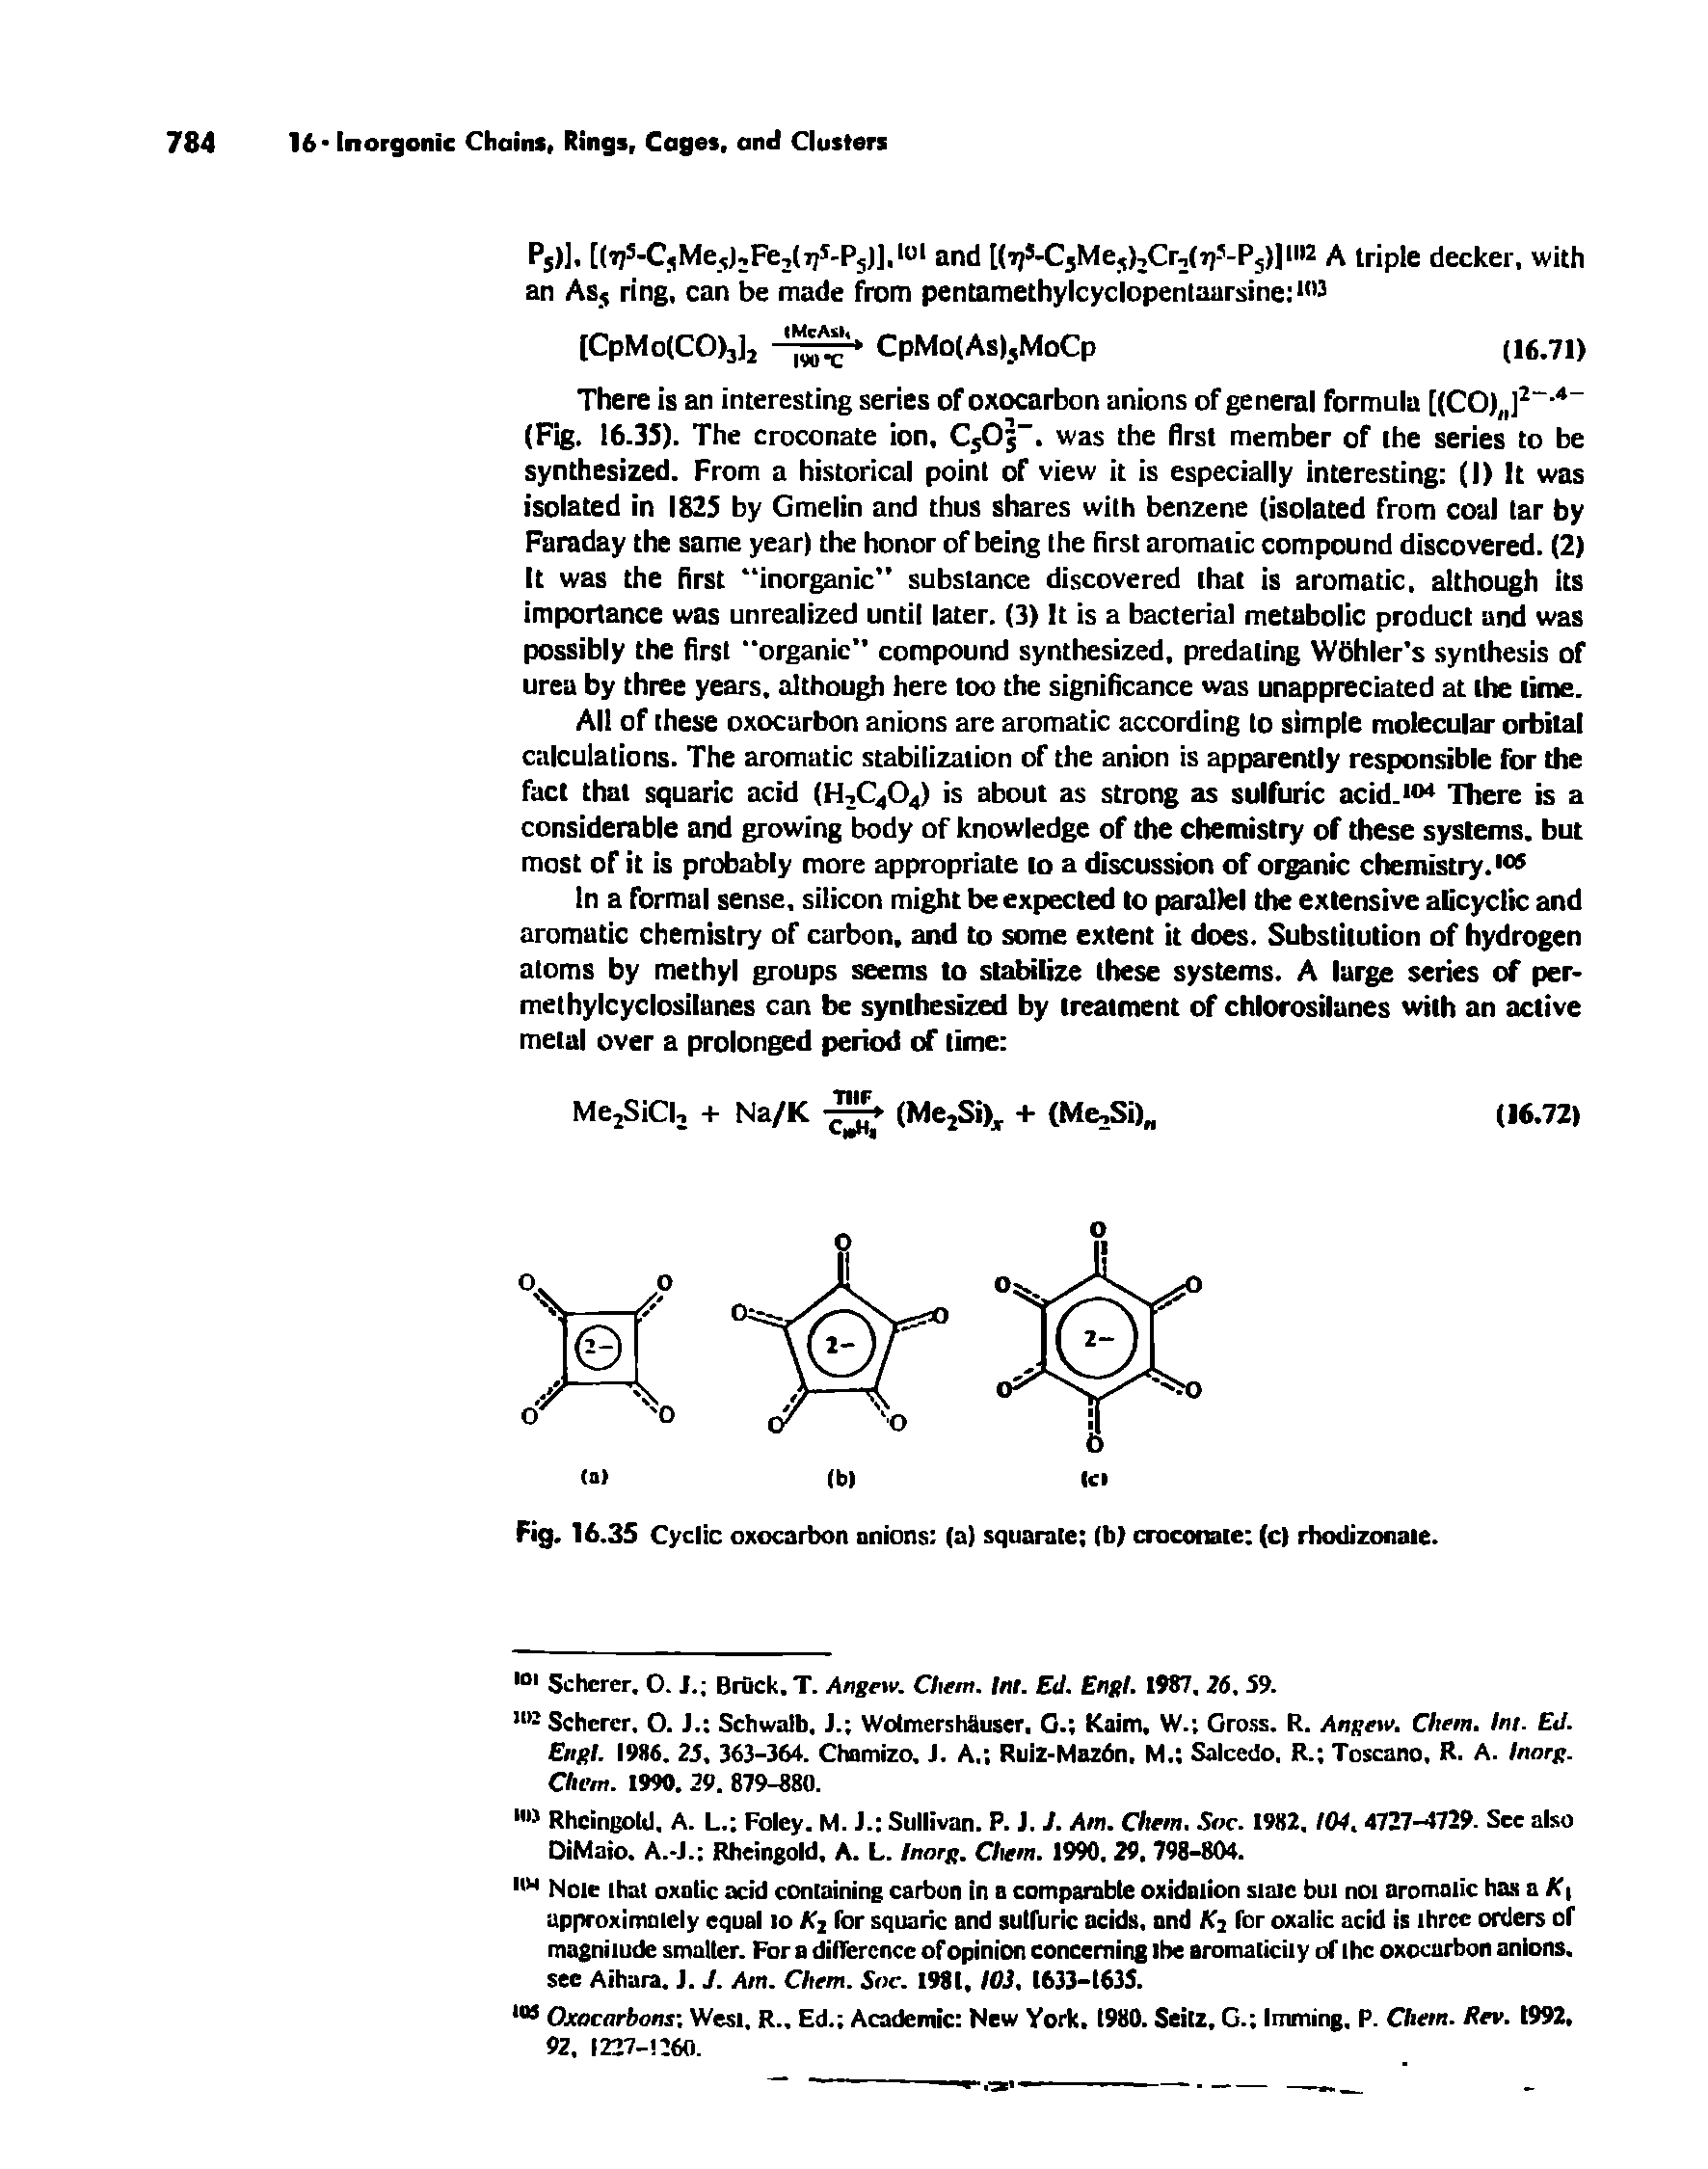 Fig. 16.35 Cyclic oxocarbon unions (a) squarate (b) croconate (c) rhodizonaie.